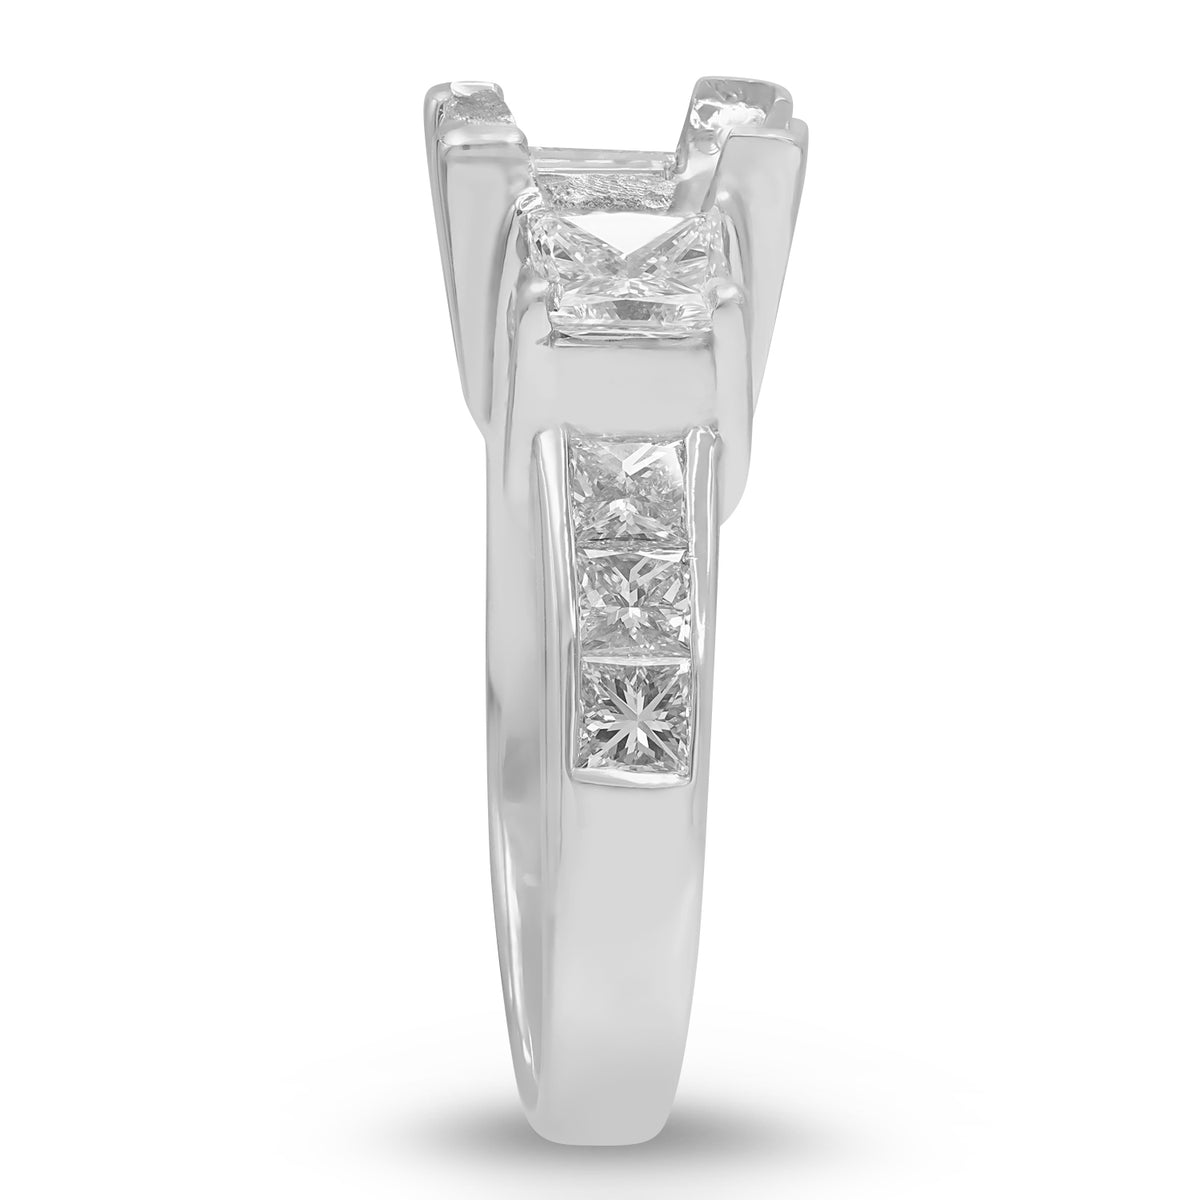 Princess Diamond Semi-mount Ring